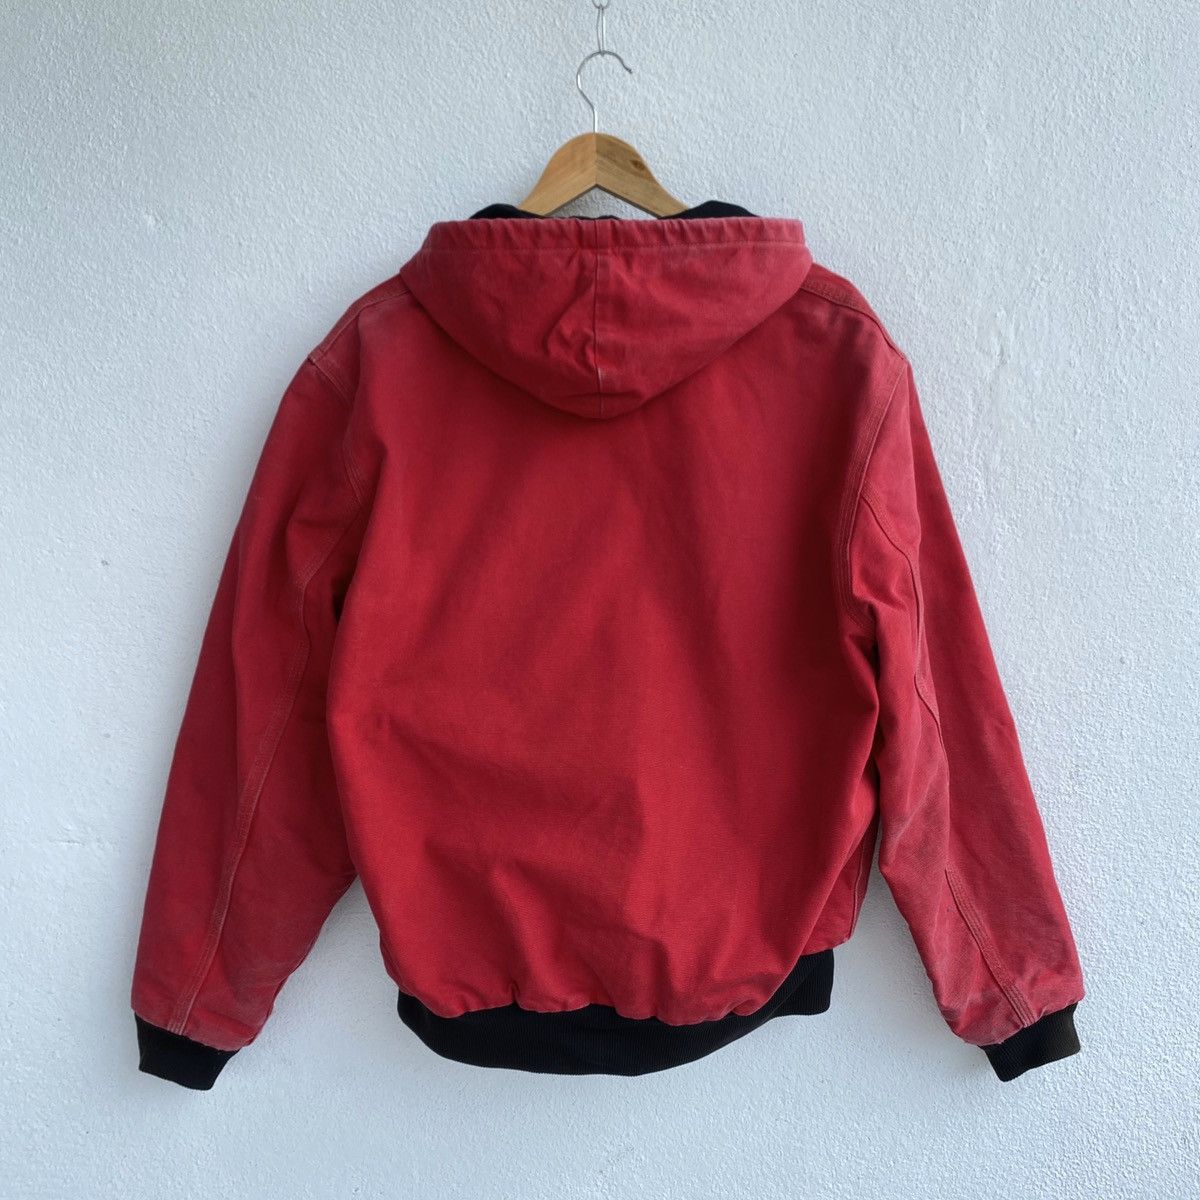 Carhartt Carhartt Hooded Zip Red Jacket Size US M / EU 48-50 / 2 - 5 Thumbnail